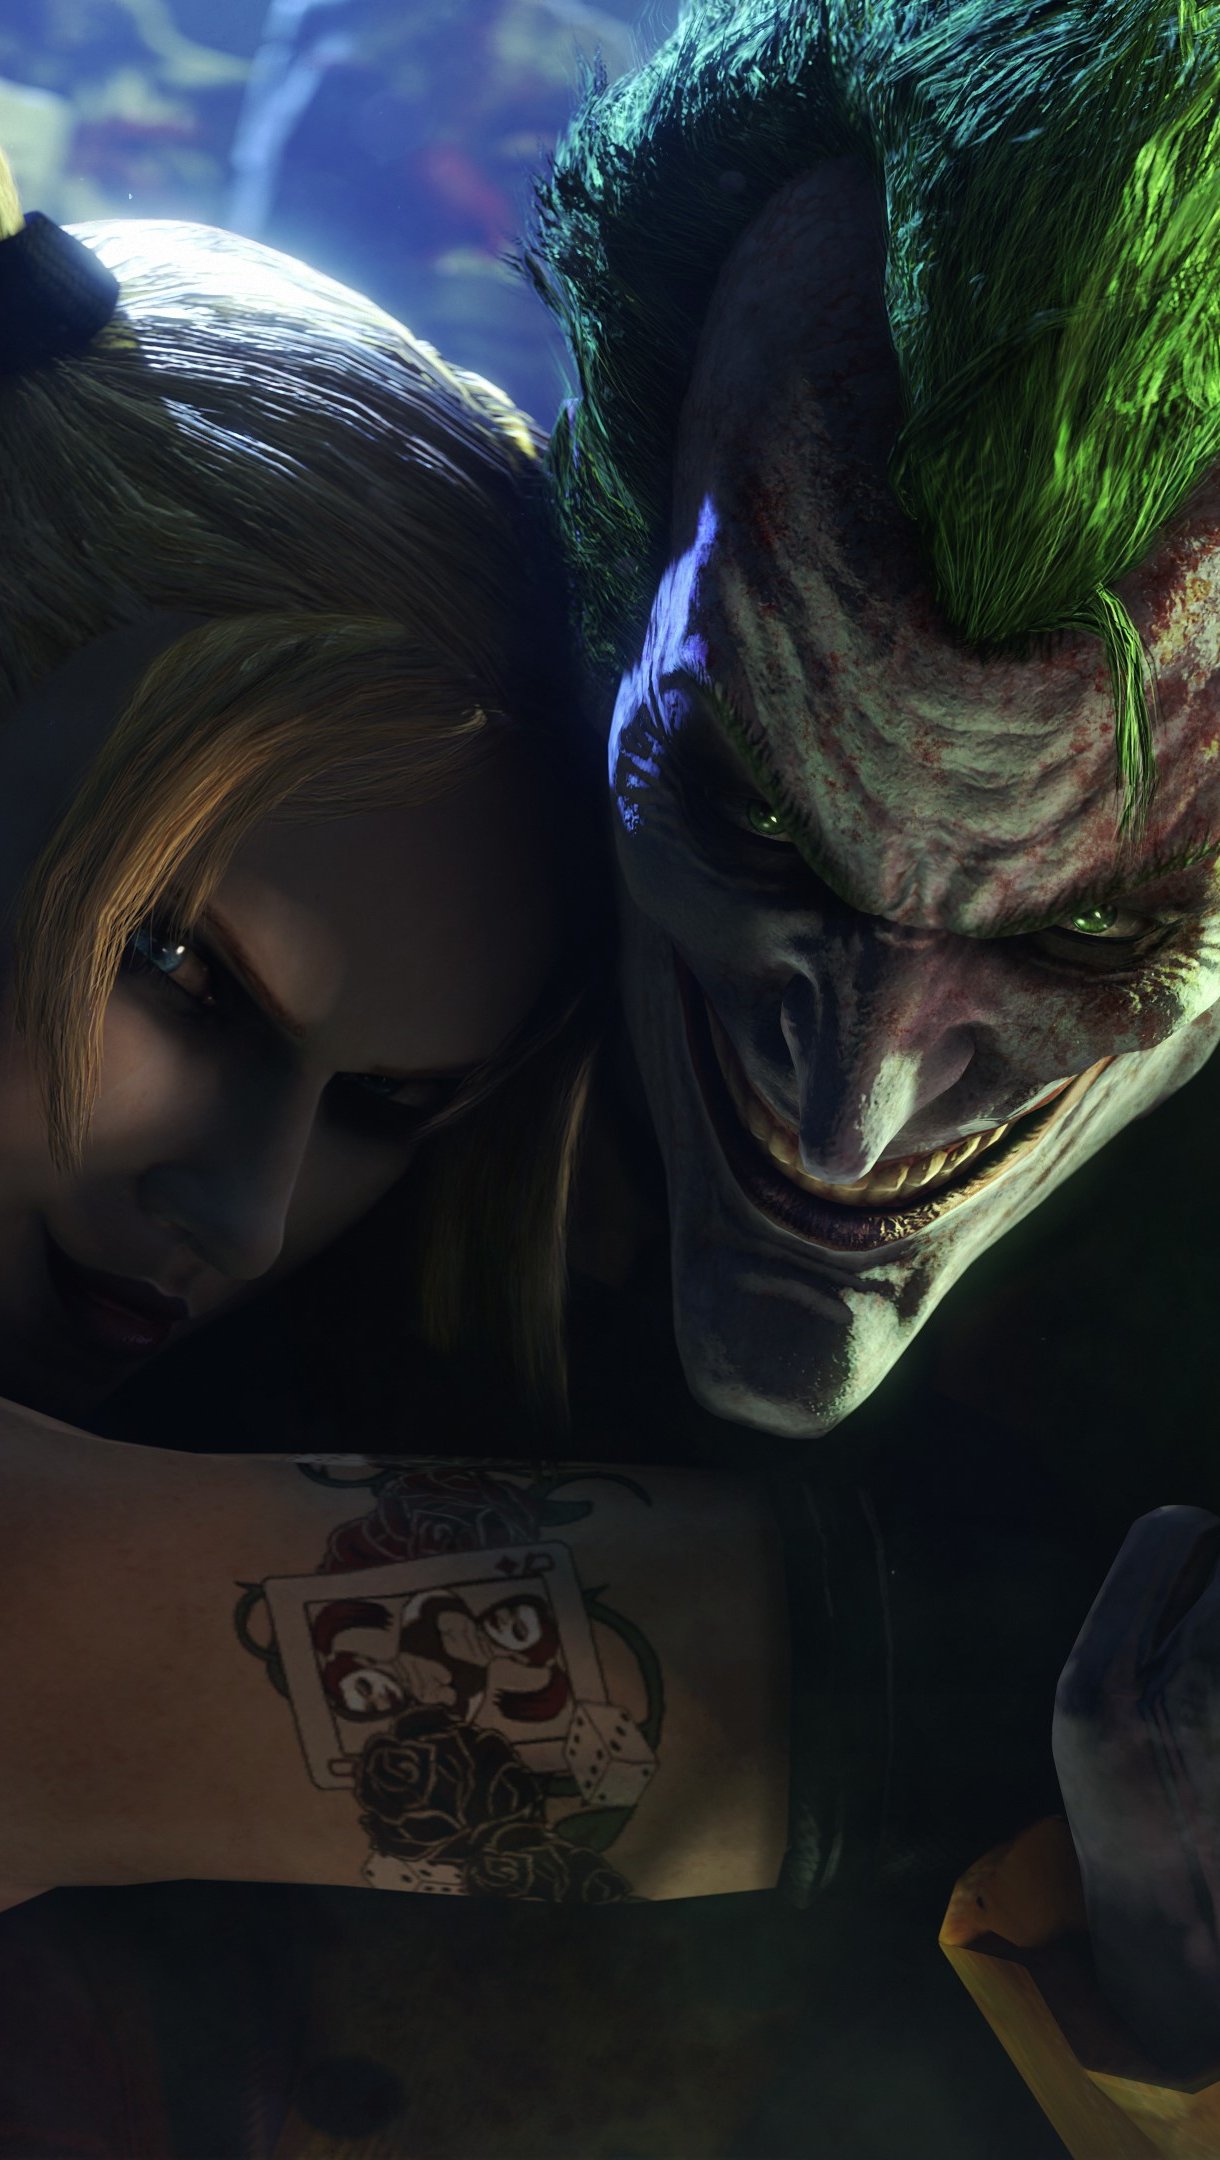 Fondos de pantalla Joker y Harley Quinn de Batman Arkham Vertical